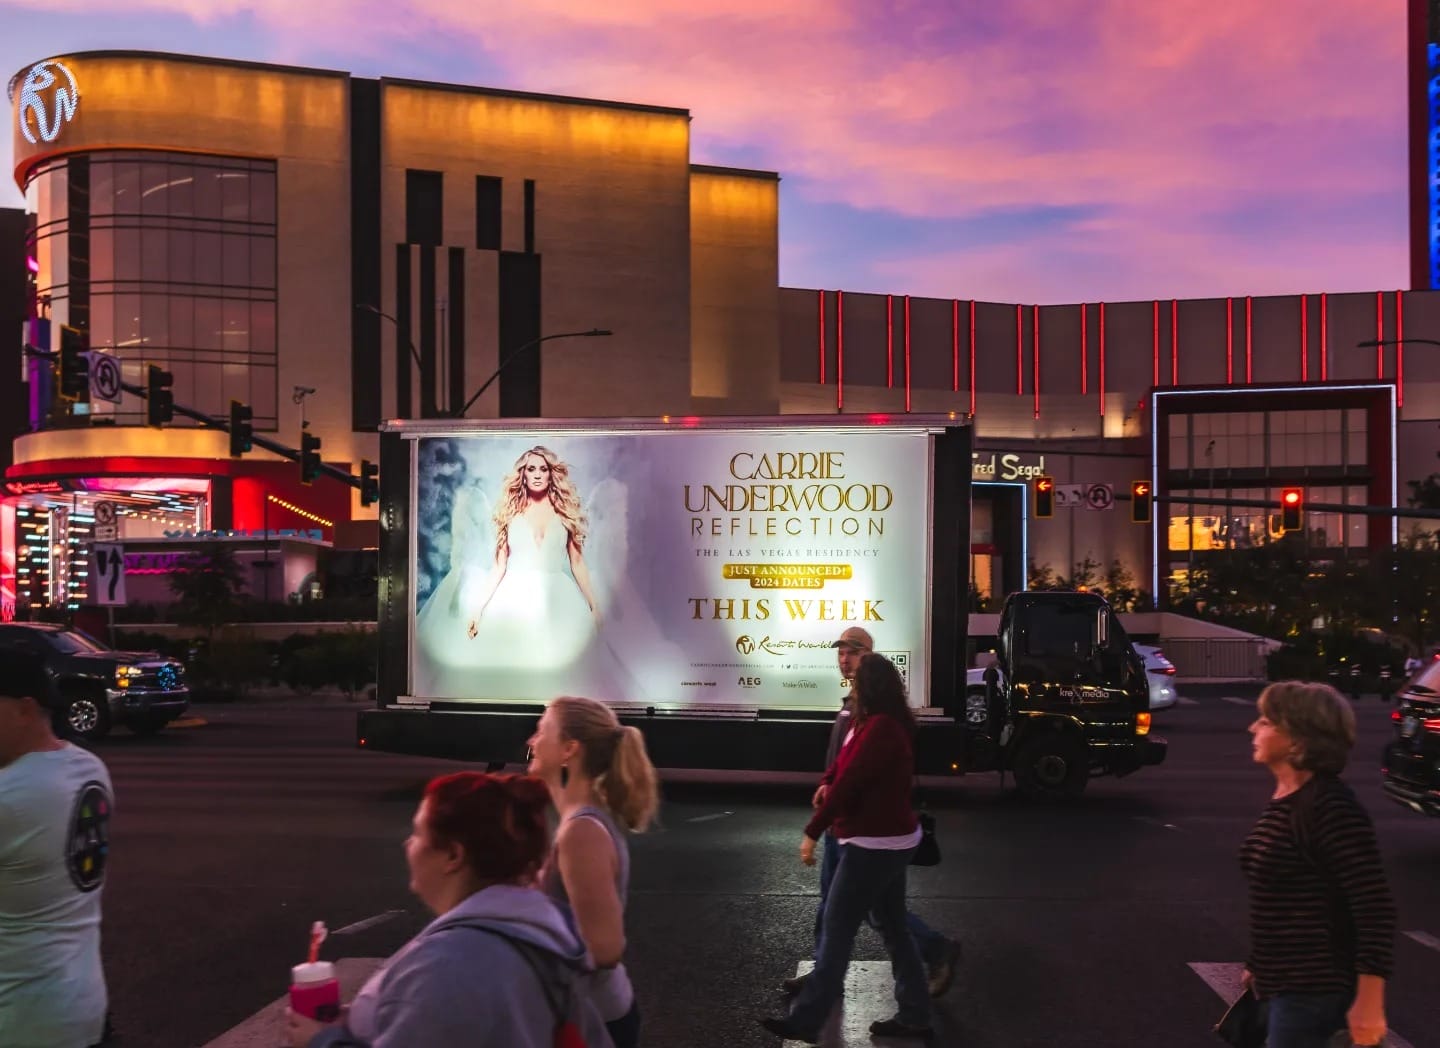 Mobile billboard truck at twilight in city.